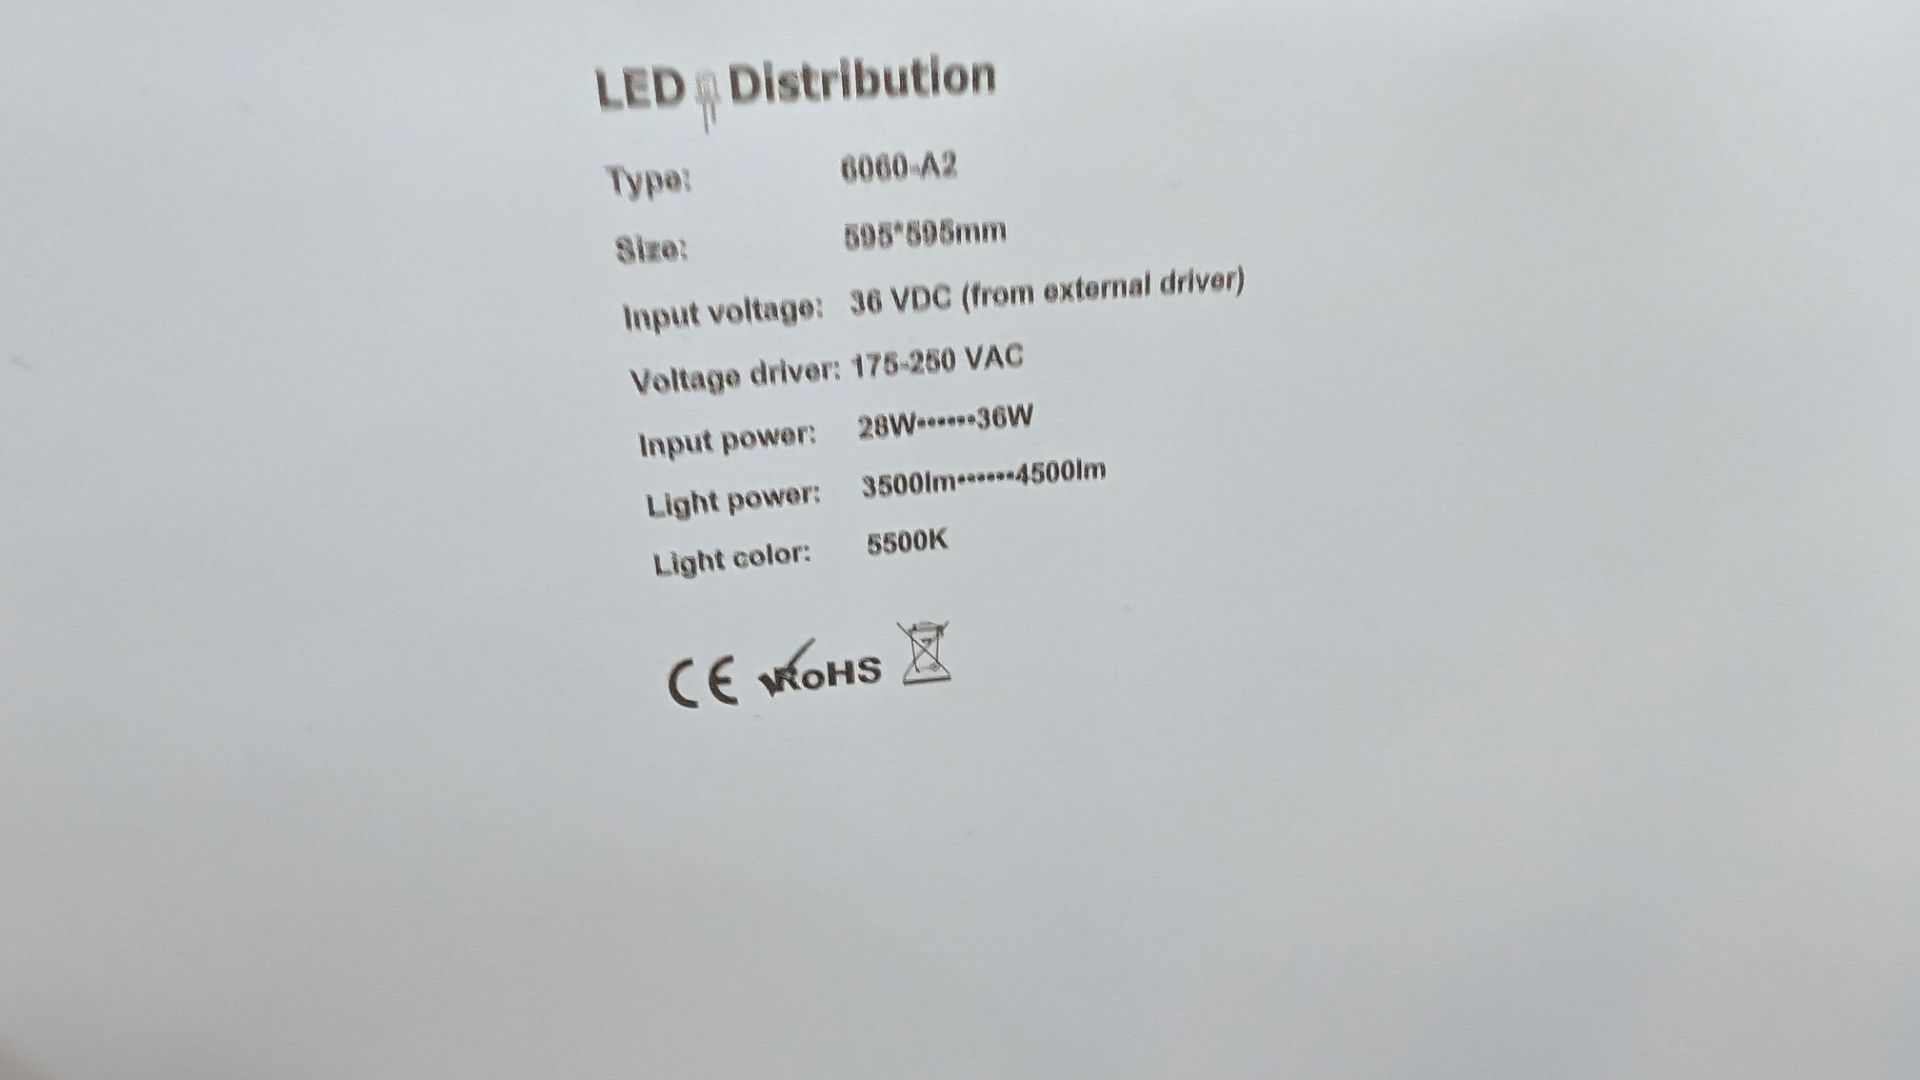 20 off Elegance Premium Eco 595mm x 595mm LED lighting panels. 5500k. 28/36w input power. 36w dri - Image 12 of 16